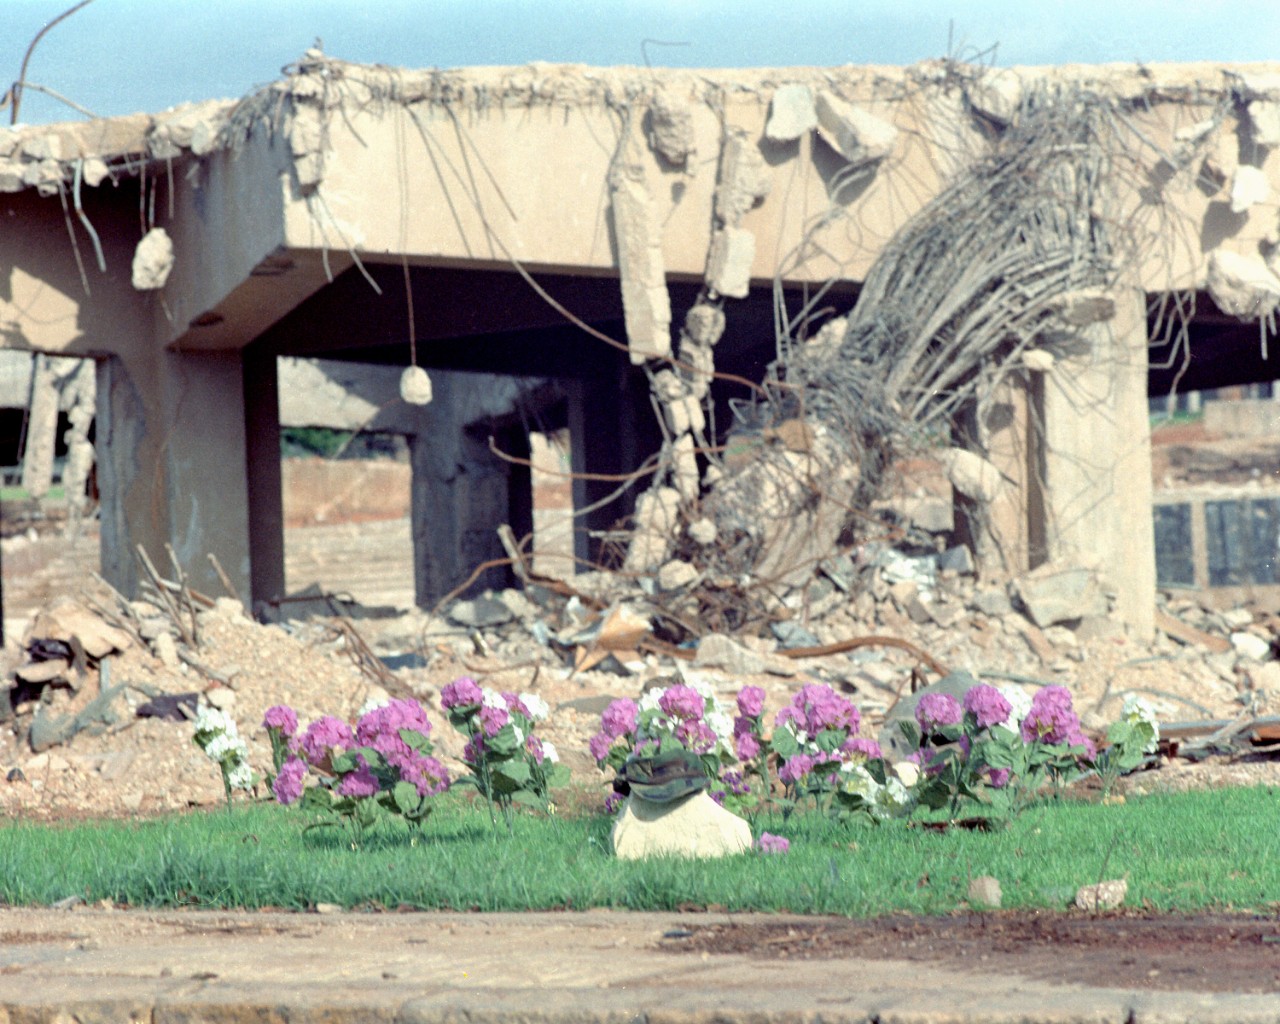 1983 Beirut attack